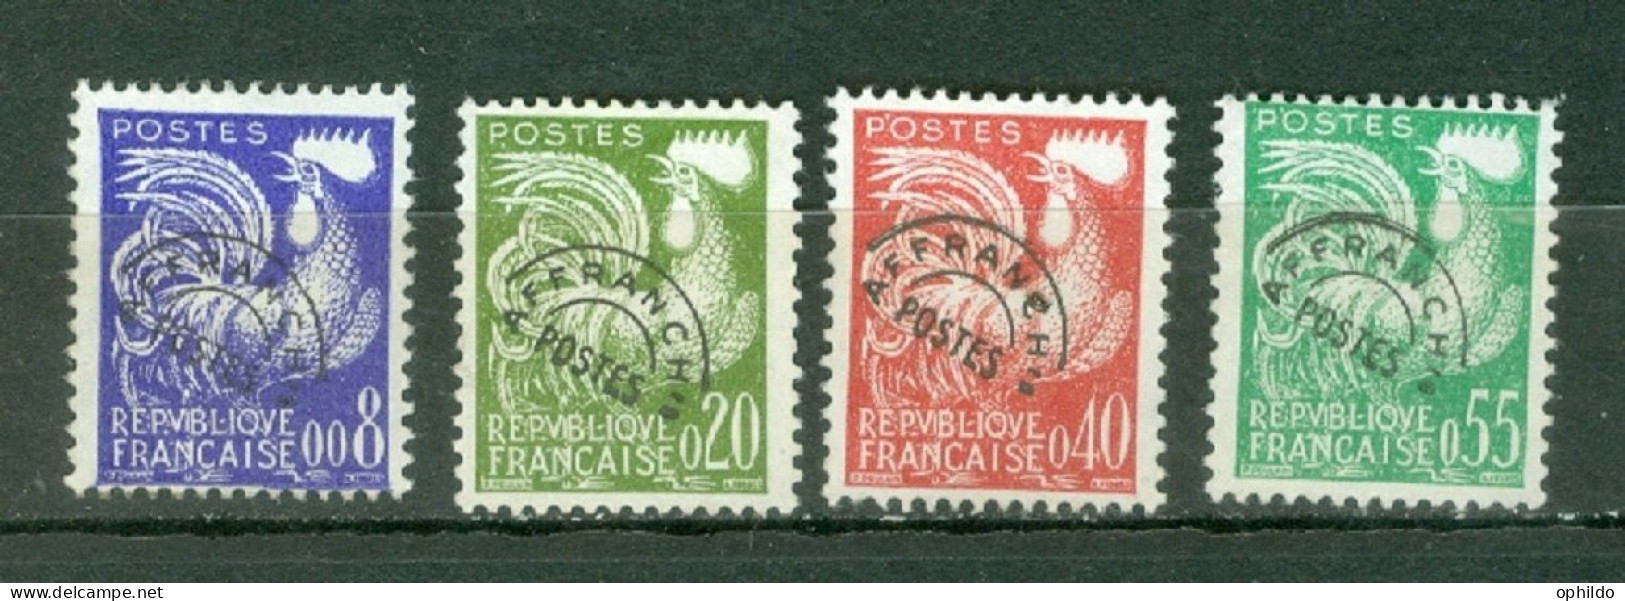 France  Preo   119/122    ( * )  TB  - 1953-1960